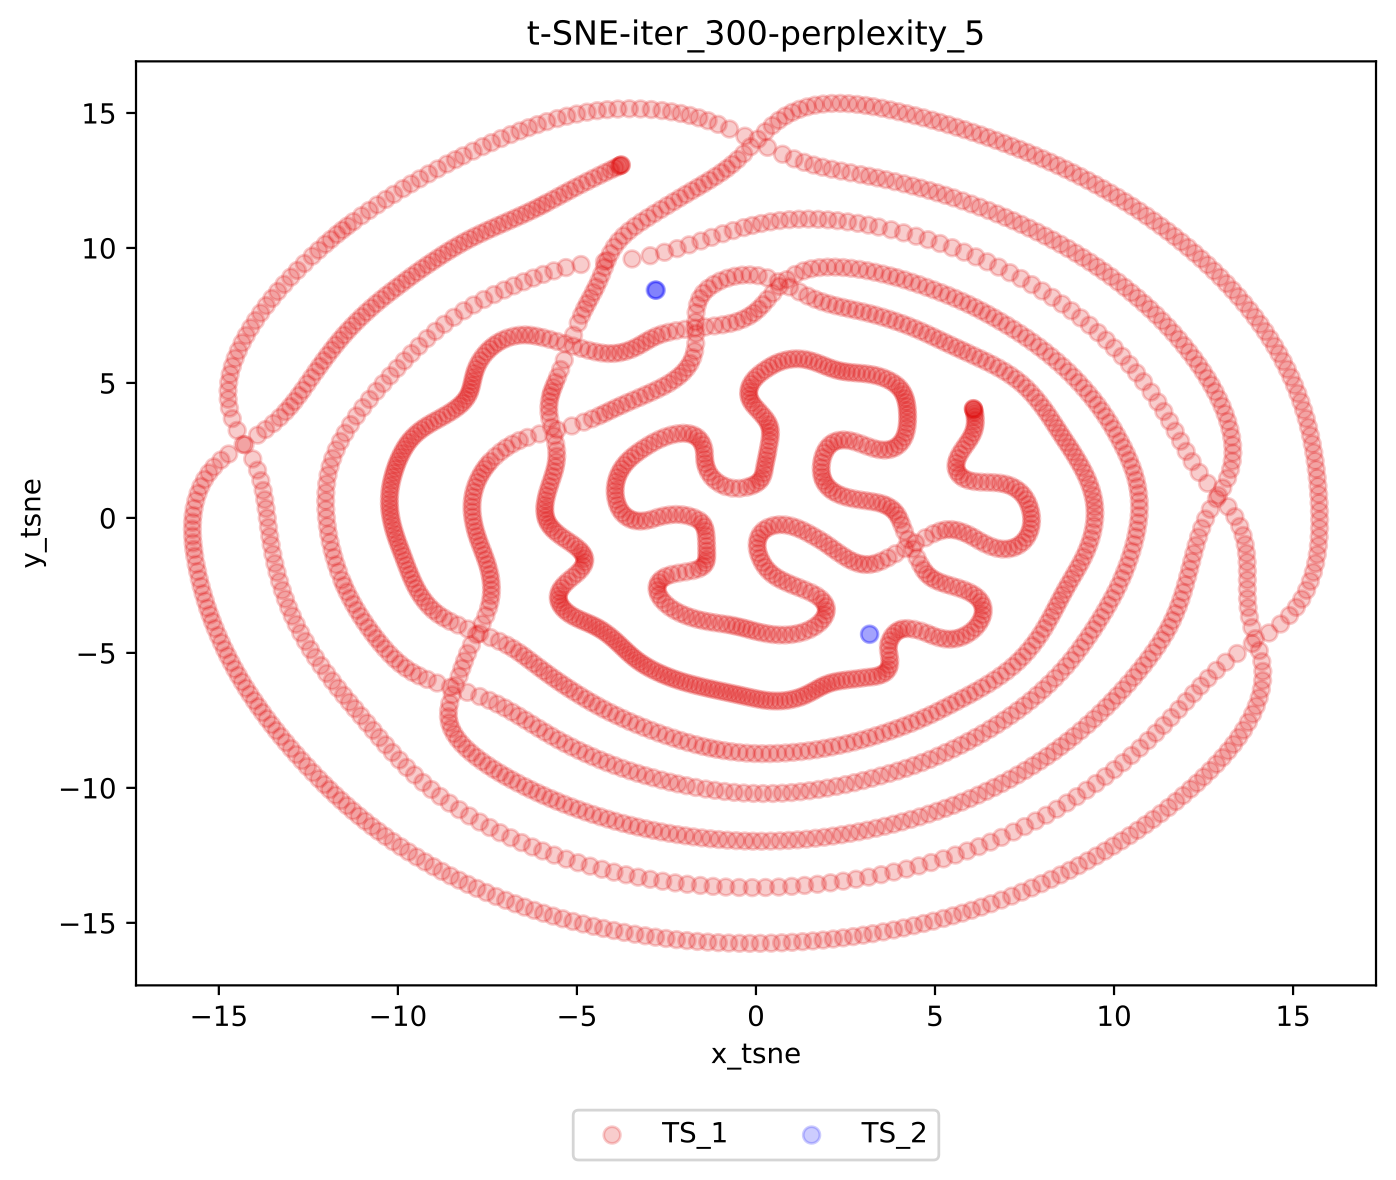 TSNE Figure 300 iterations 5 perplexity